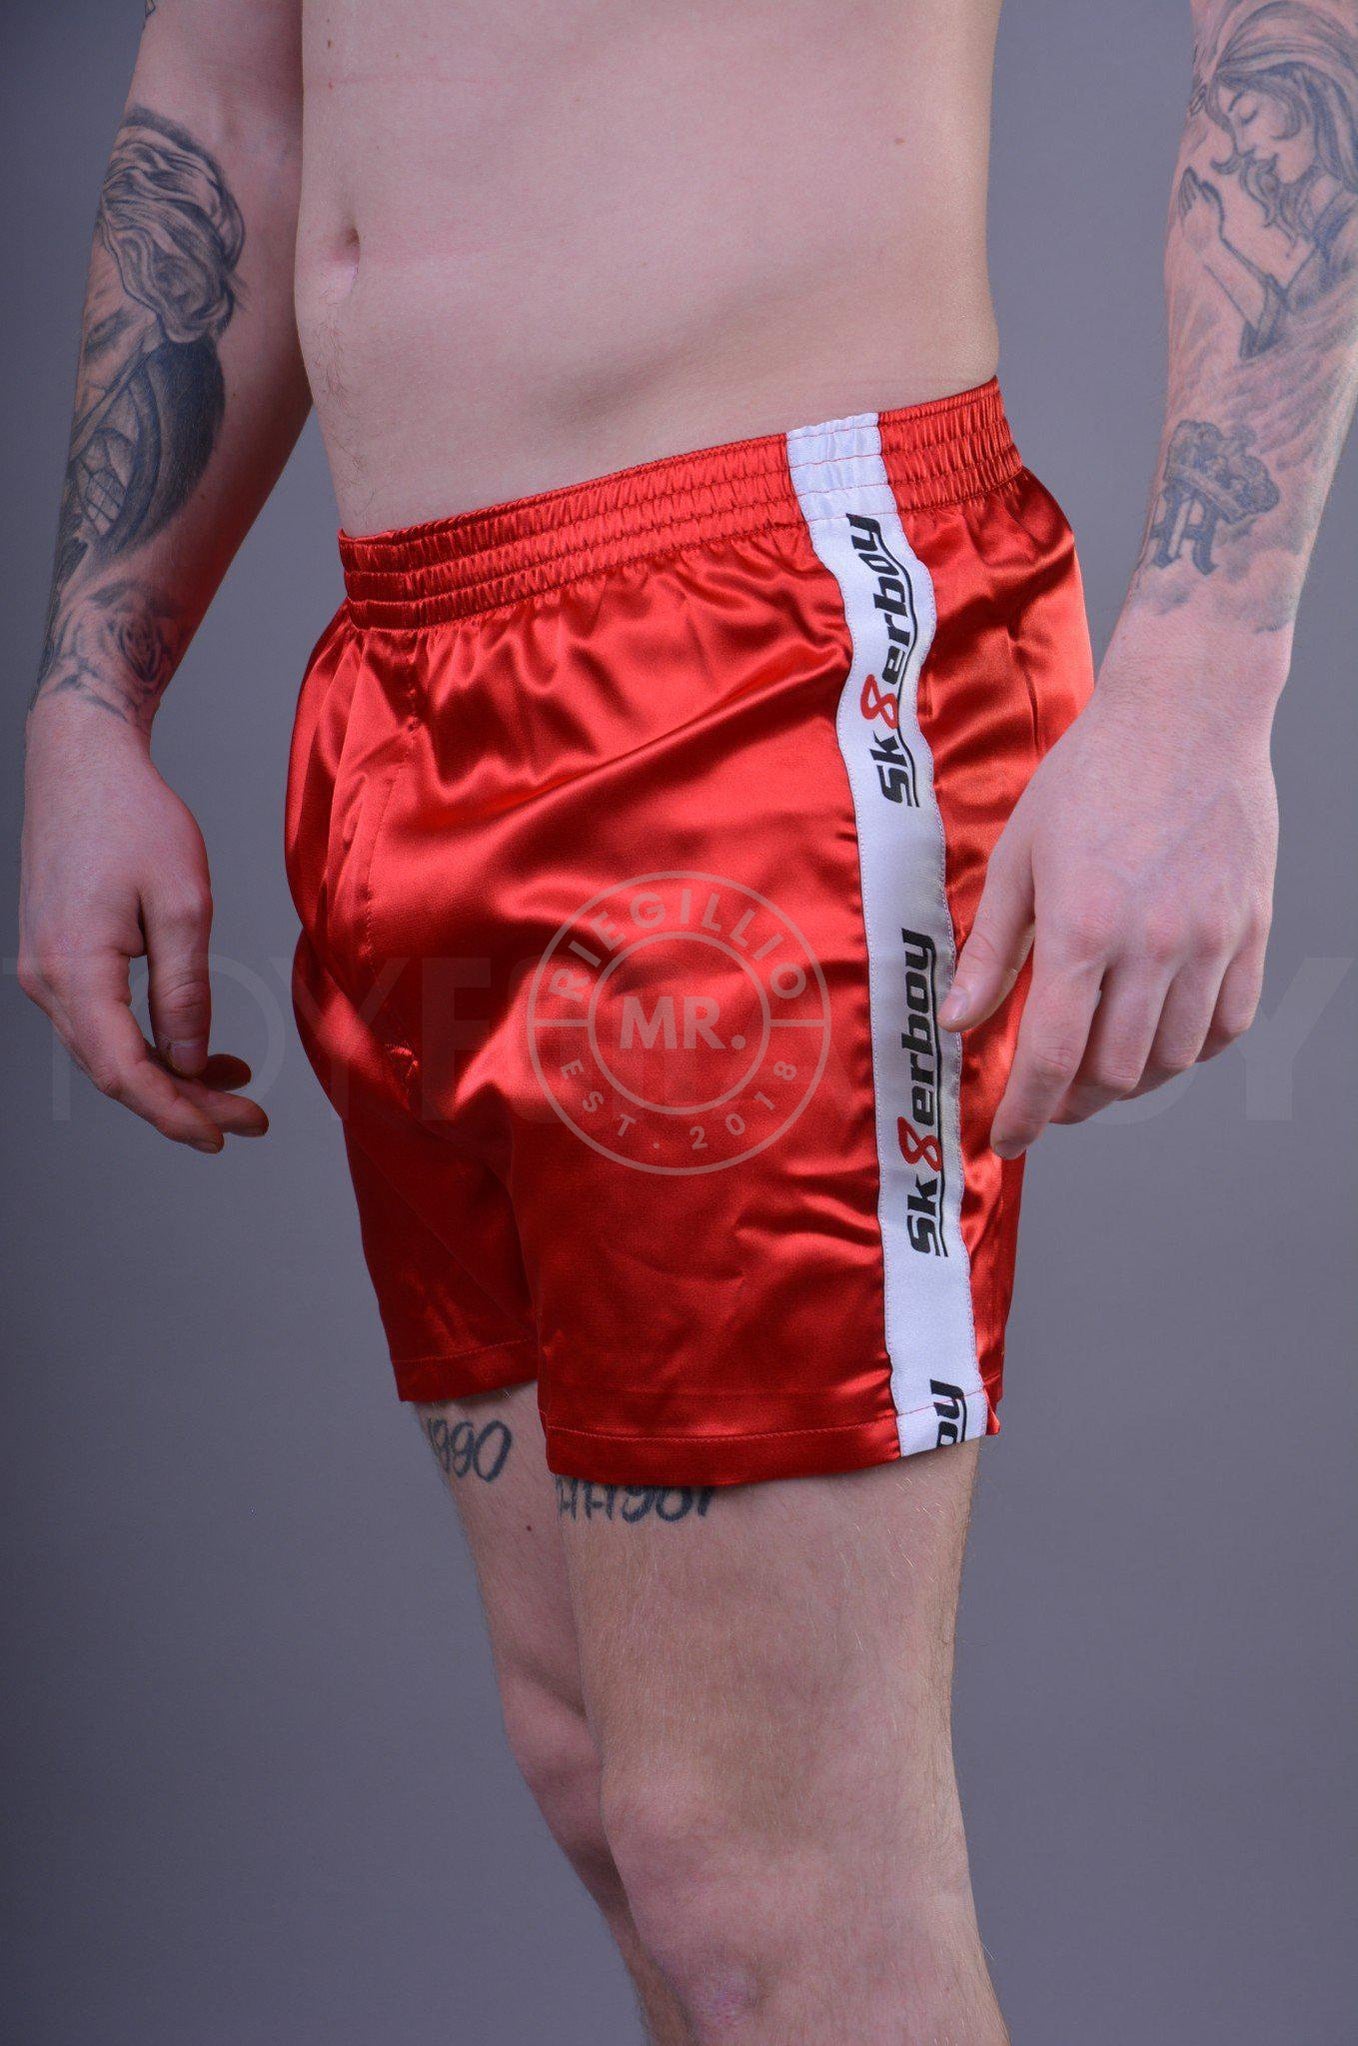 Sk8erboy Shiny Boxershort - Red-at MR. Riegillio